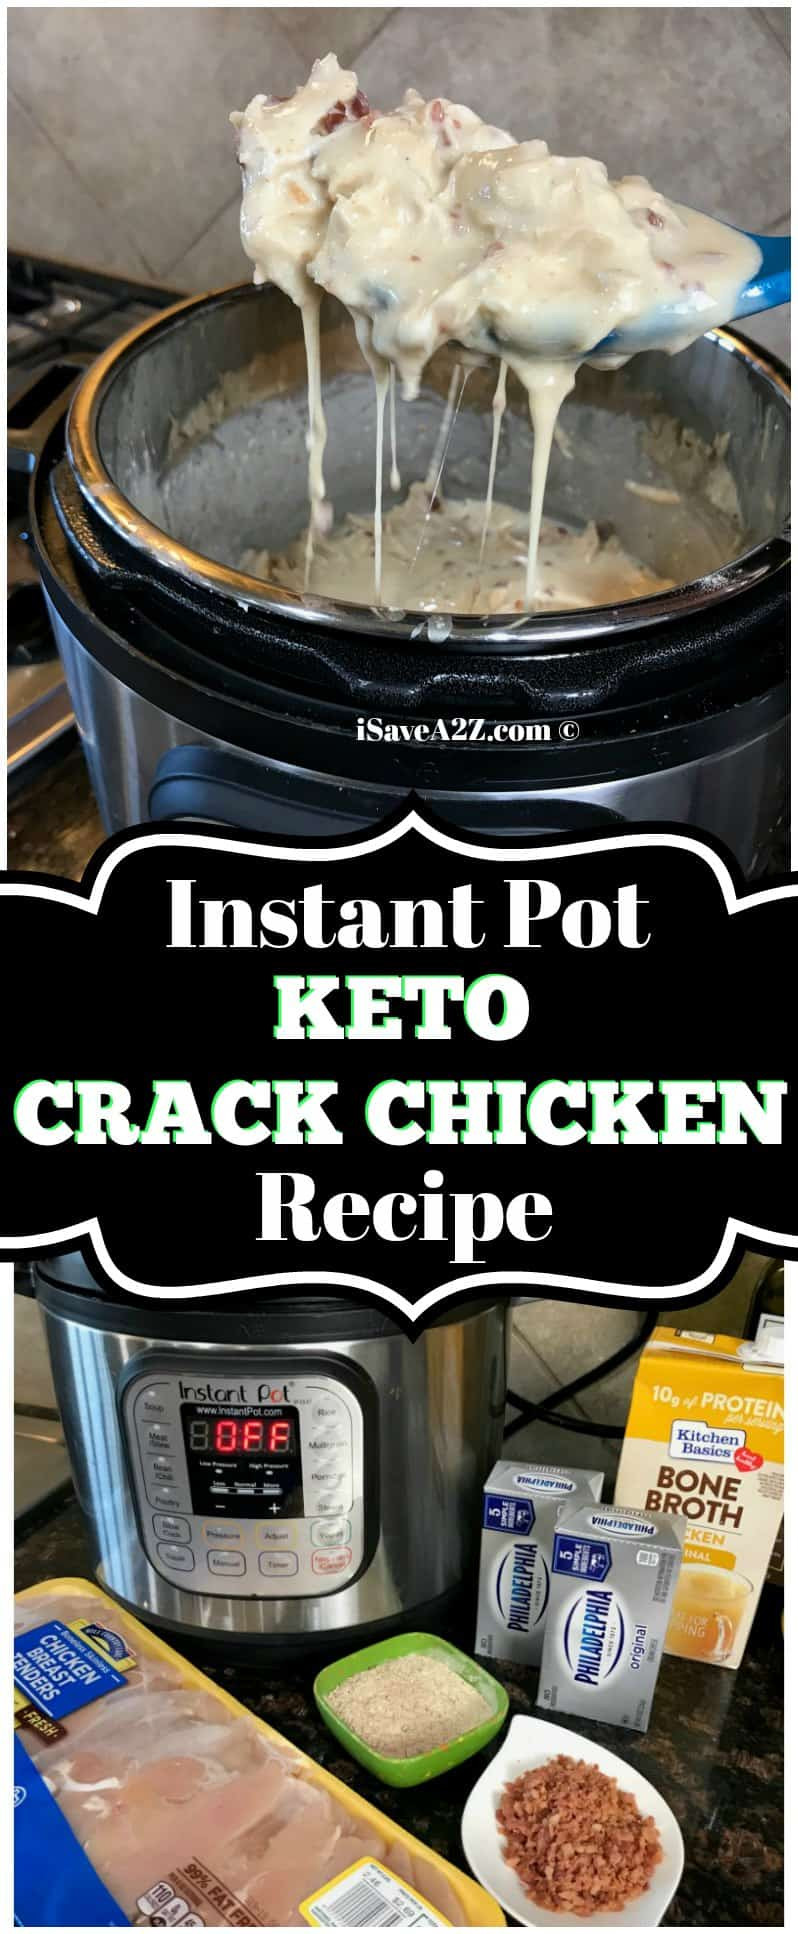 Instapot Keto Recipes
 Instant Pot Keto Crack Chicken Recipe iSaveA2Z